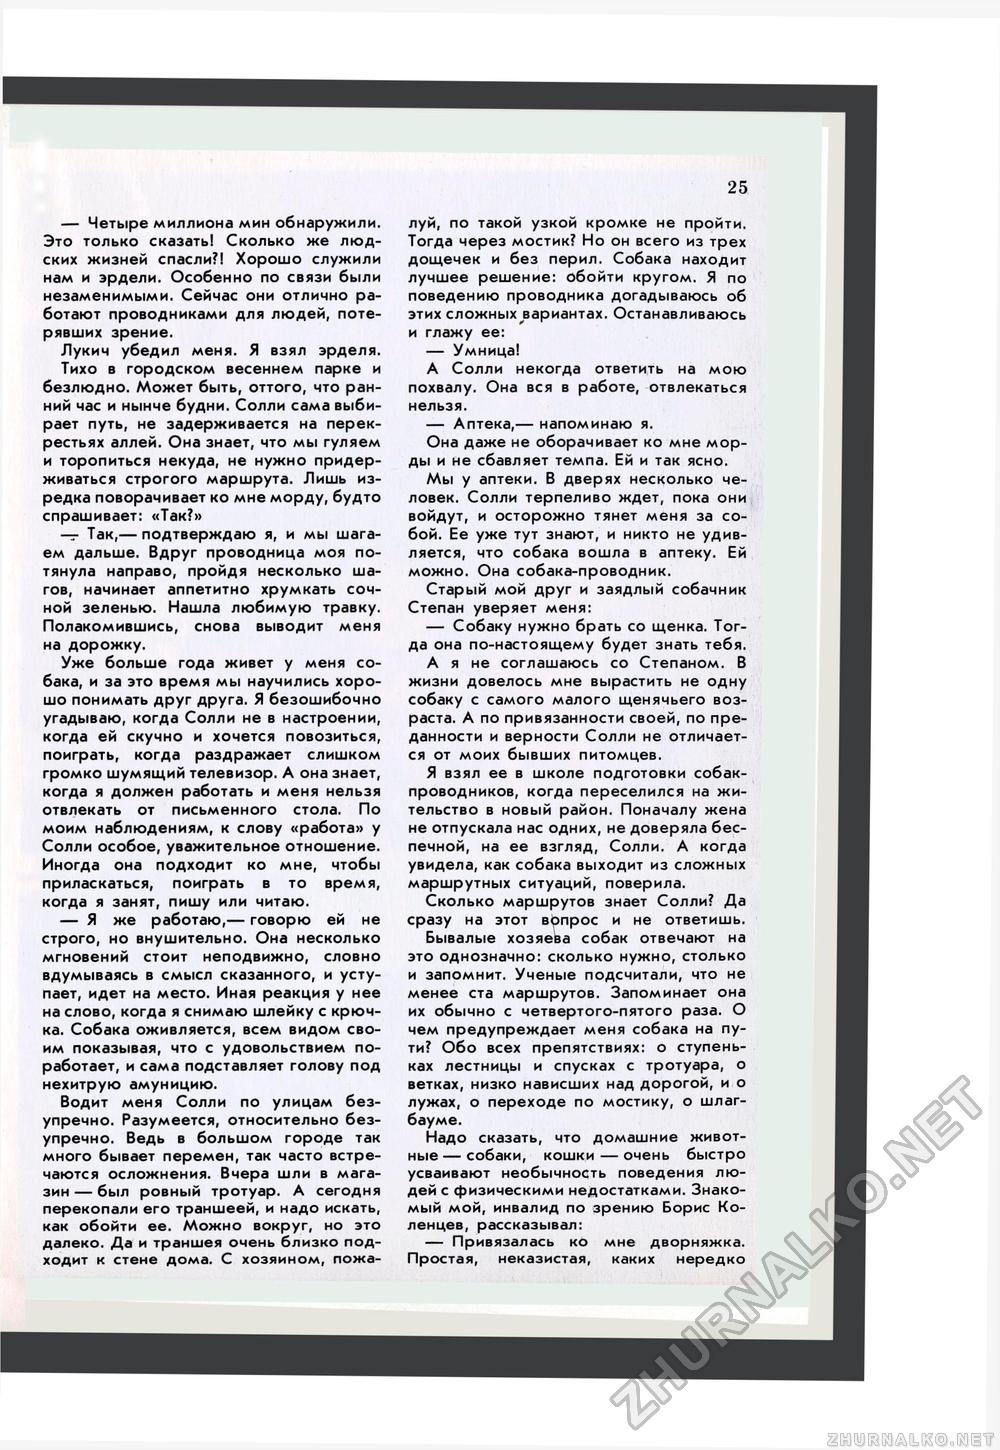 Юный Натуралист 1985-10, страница 27